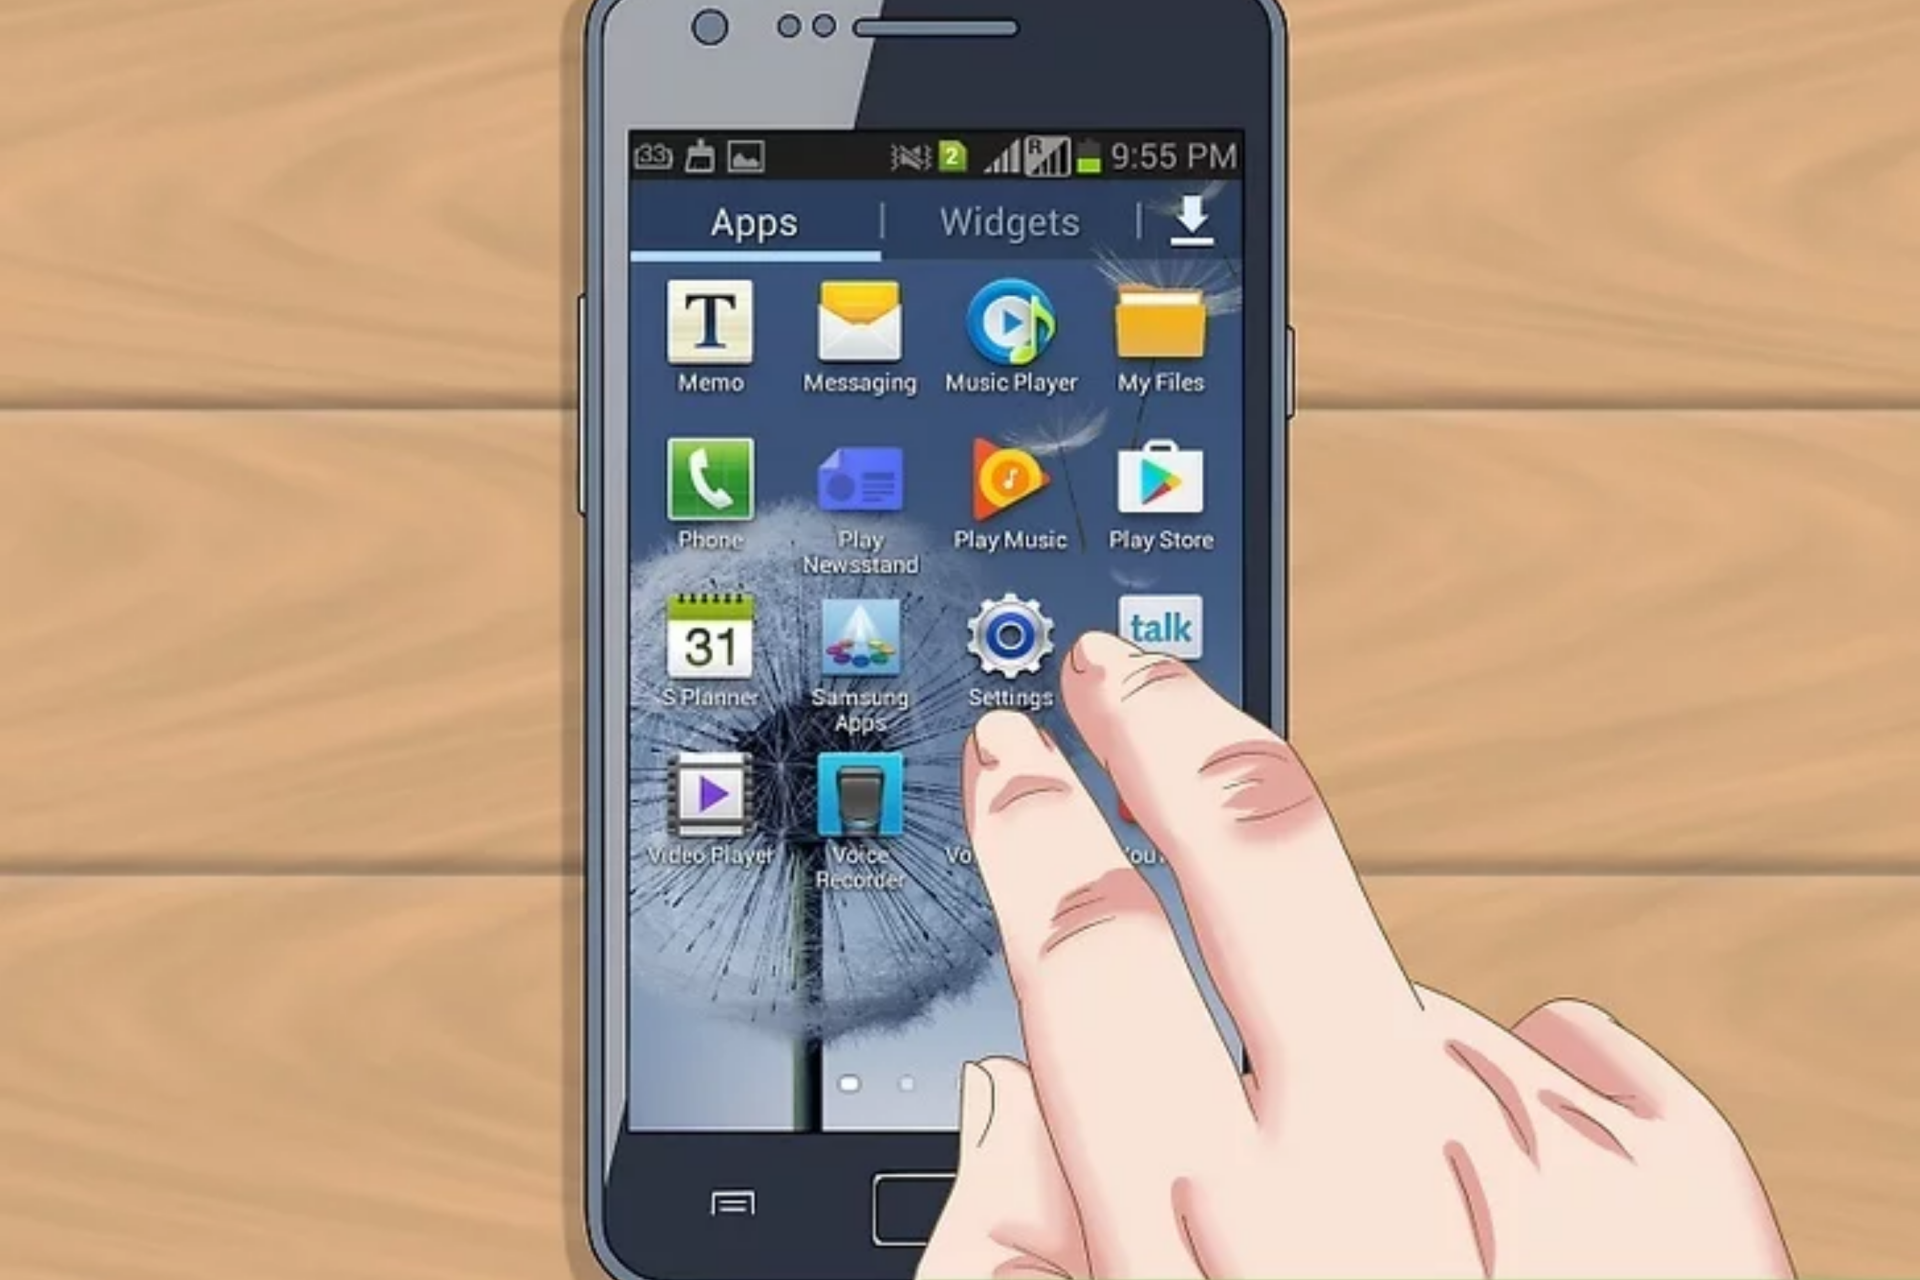 Galaxy 2 экран. Принтскрин на смартфоне самсунг. Скриншот экрана самсунг галакси. Скрин экрана на самсунг галакси с 12. Скрин экрана на самсунге галакси.